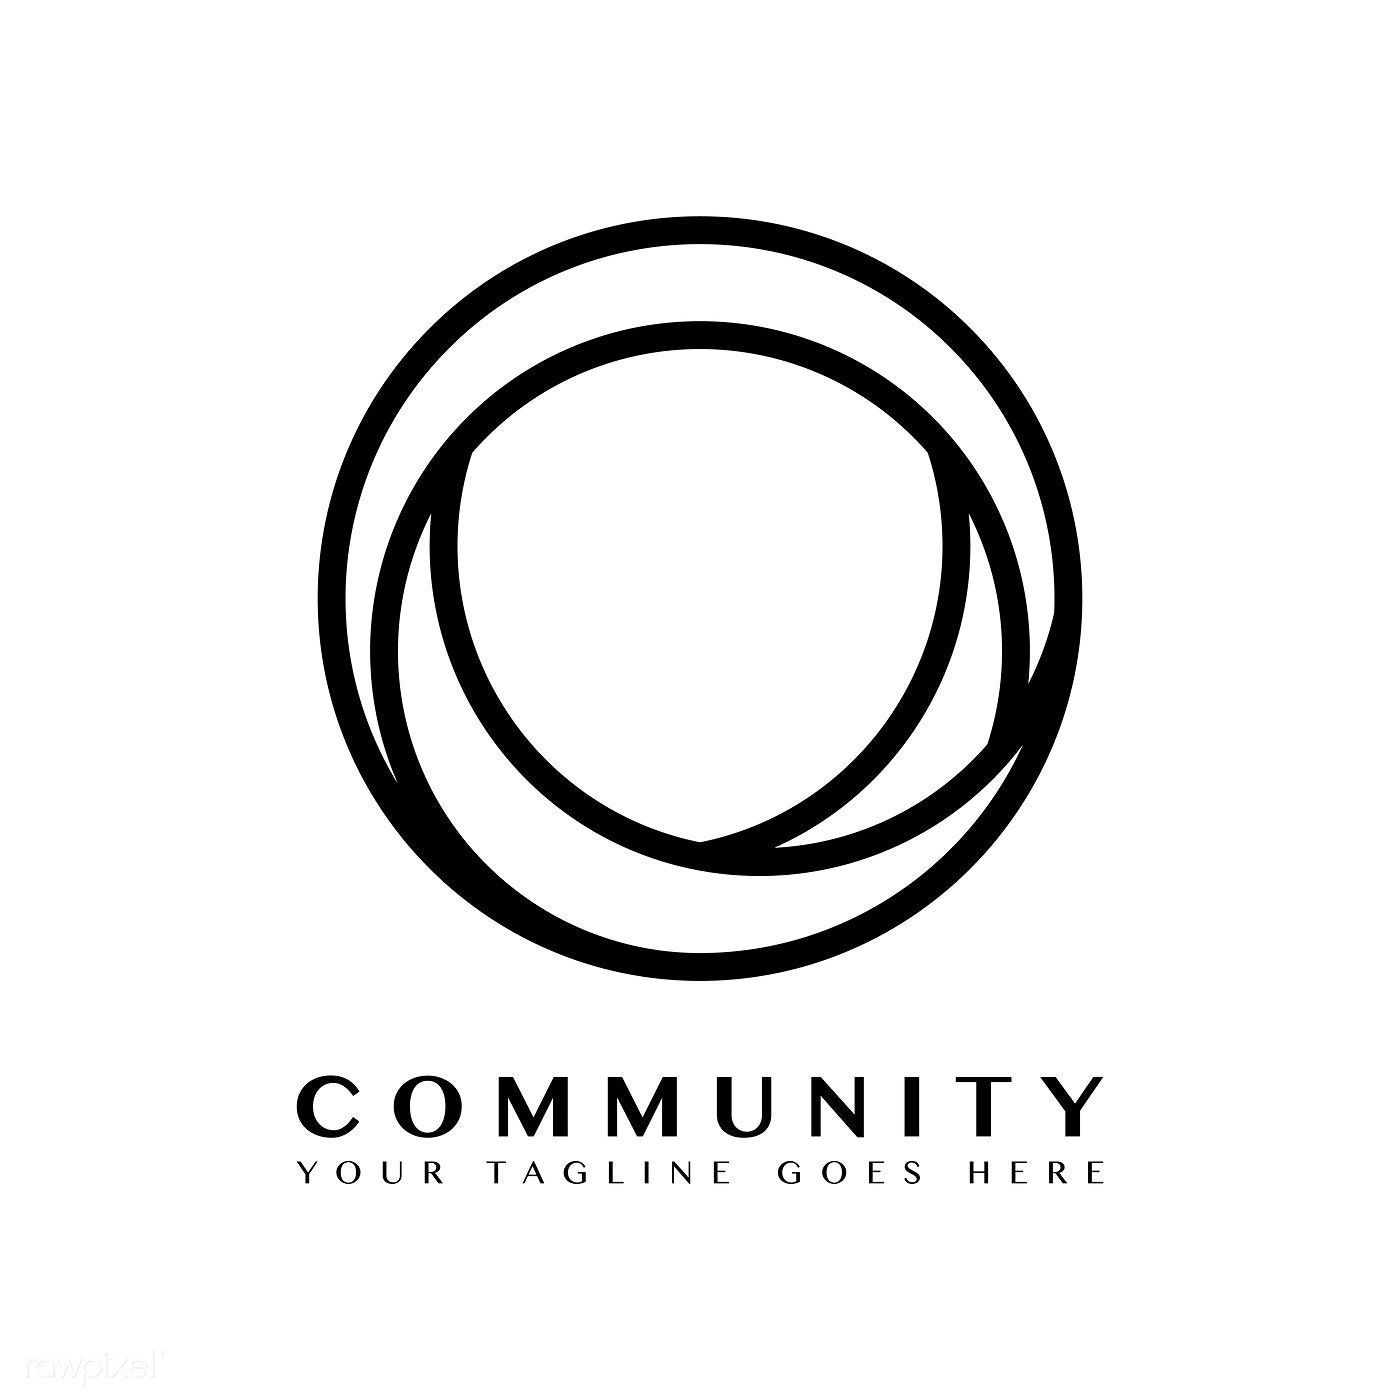 Download free vector of Community branding logo design sample 503748 -   10 planting Logo branding ideas